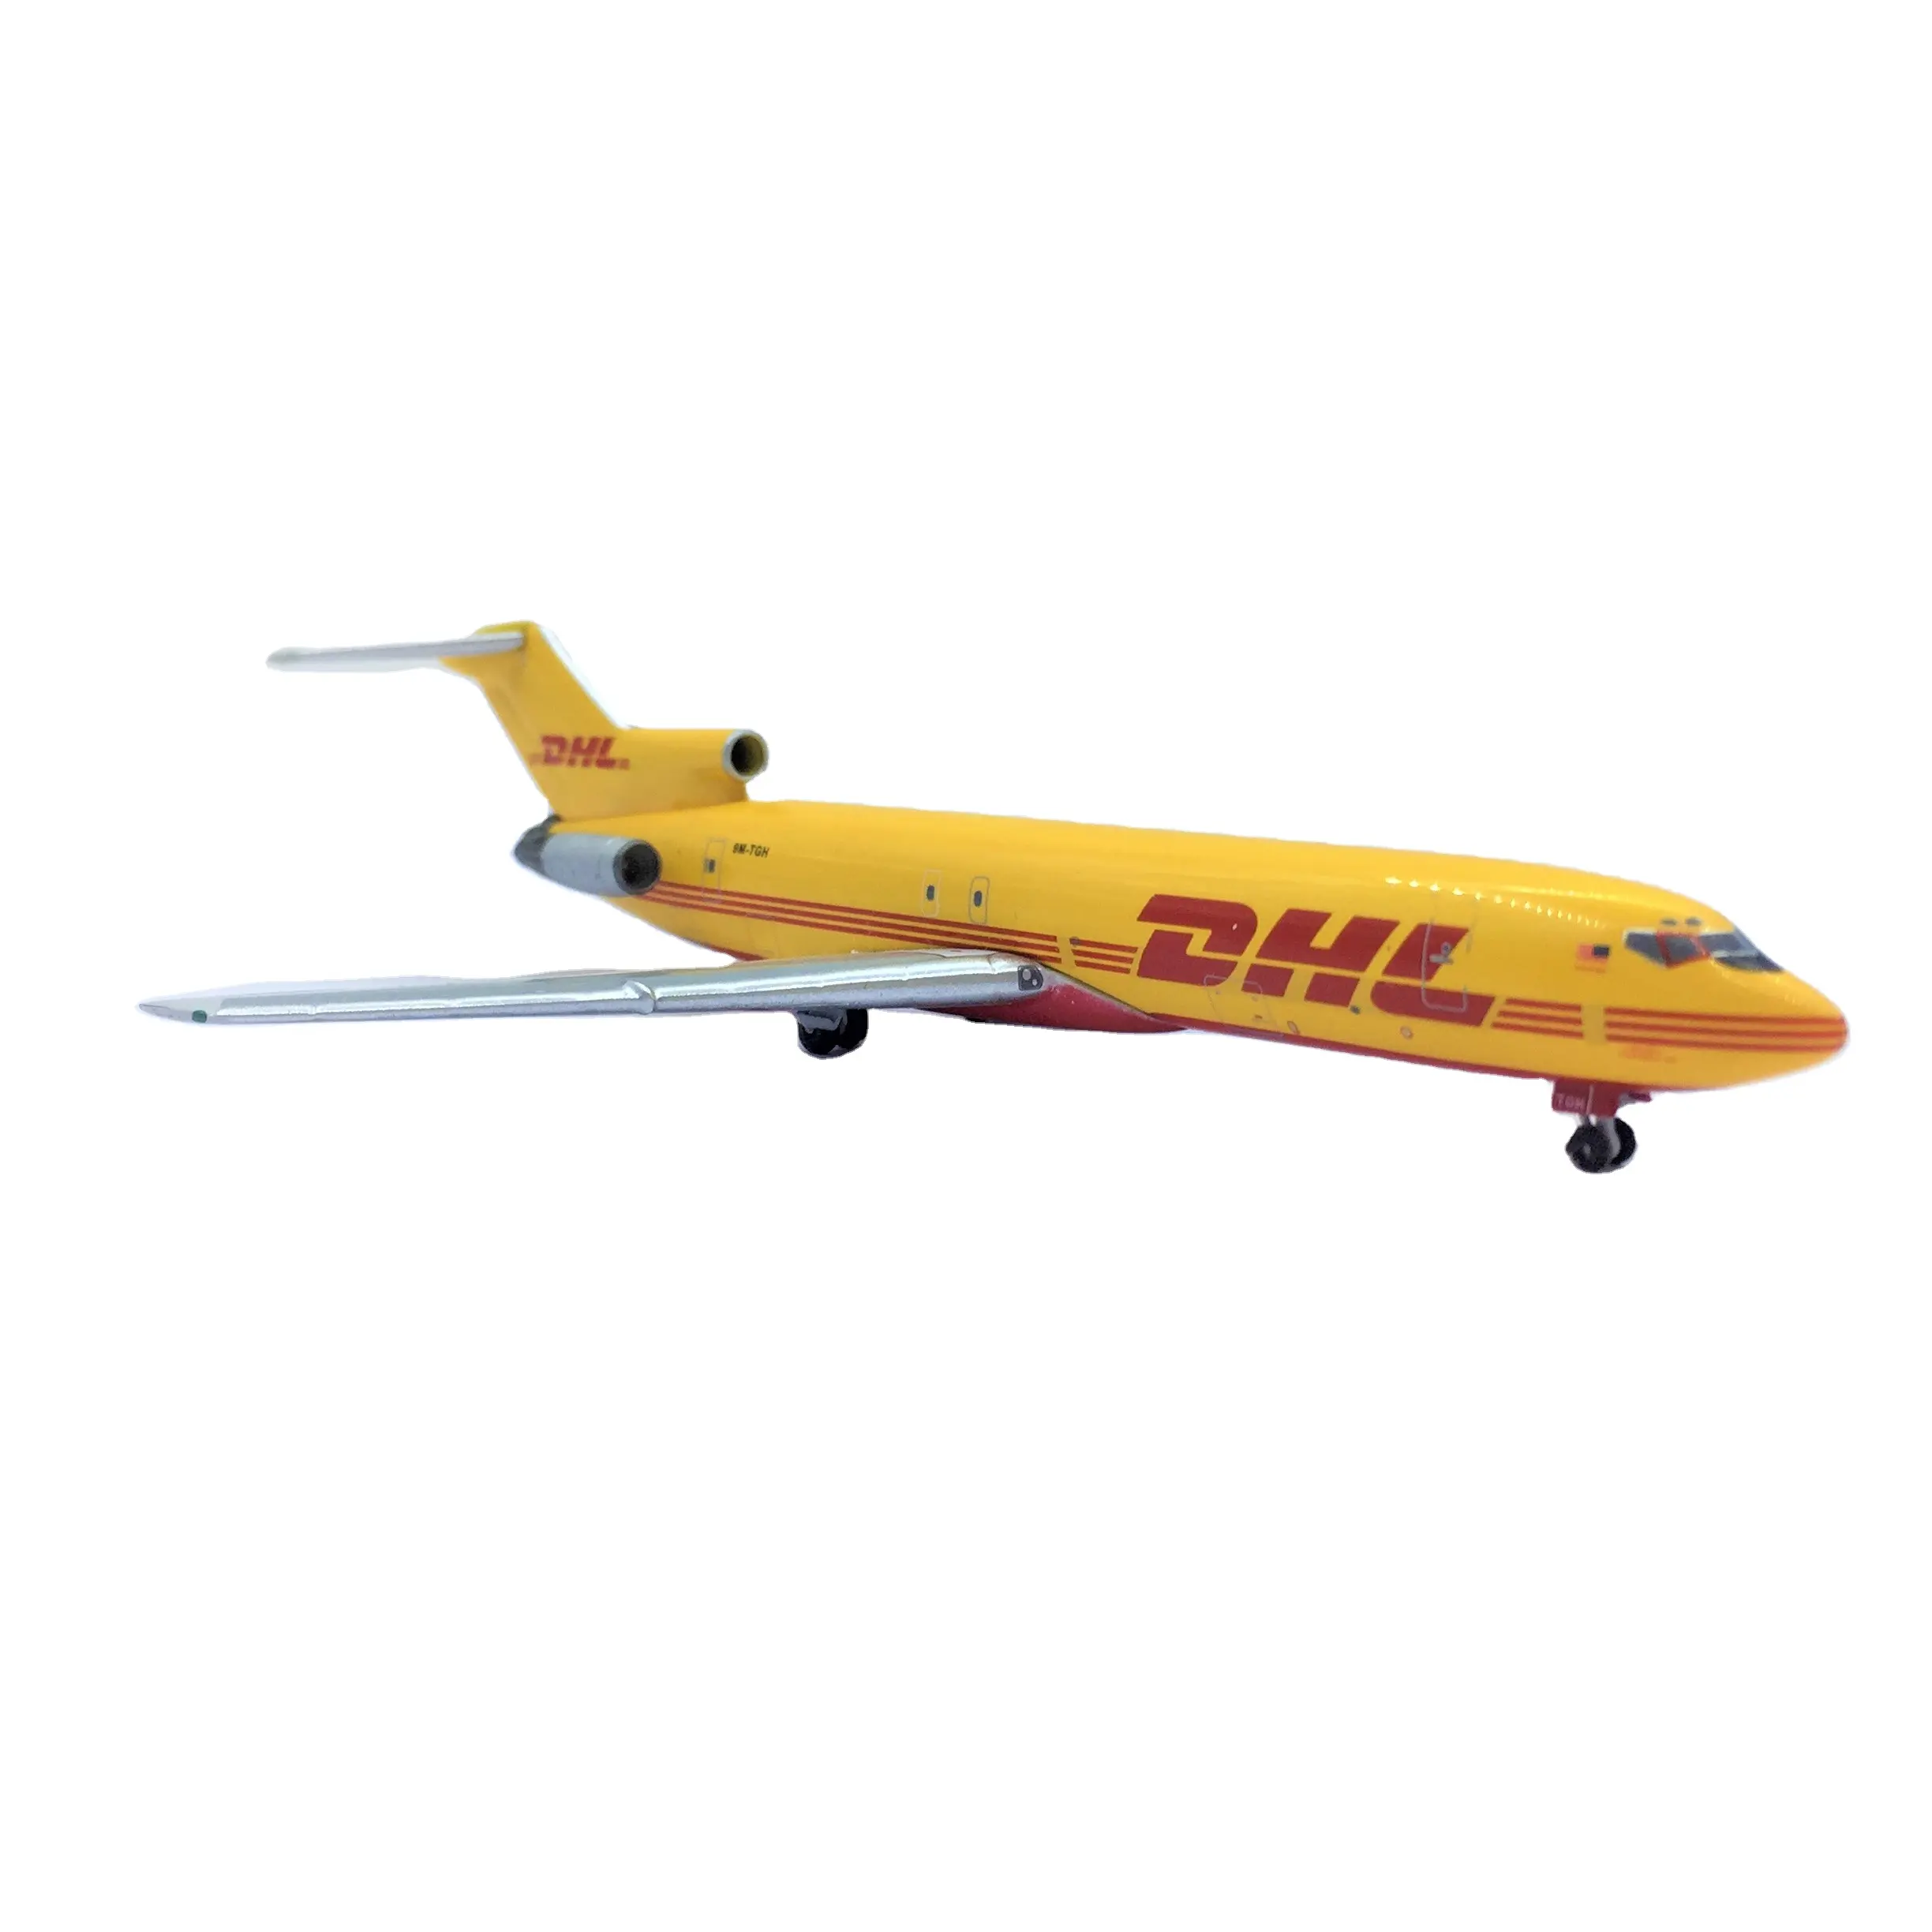 DHL B727-200 customized 1 400 die cast model plane die cast model aircraft